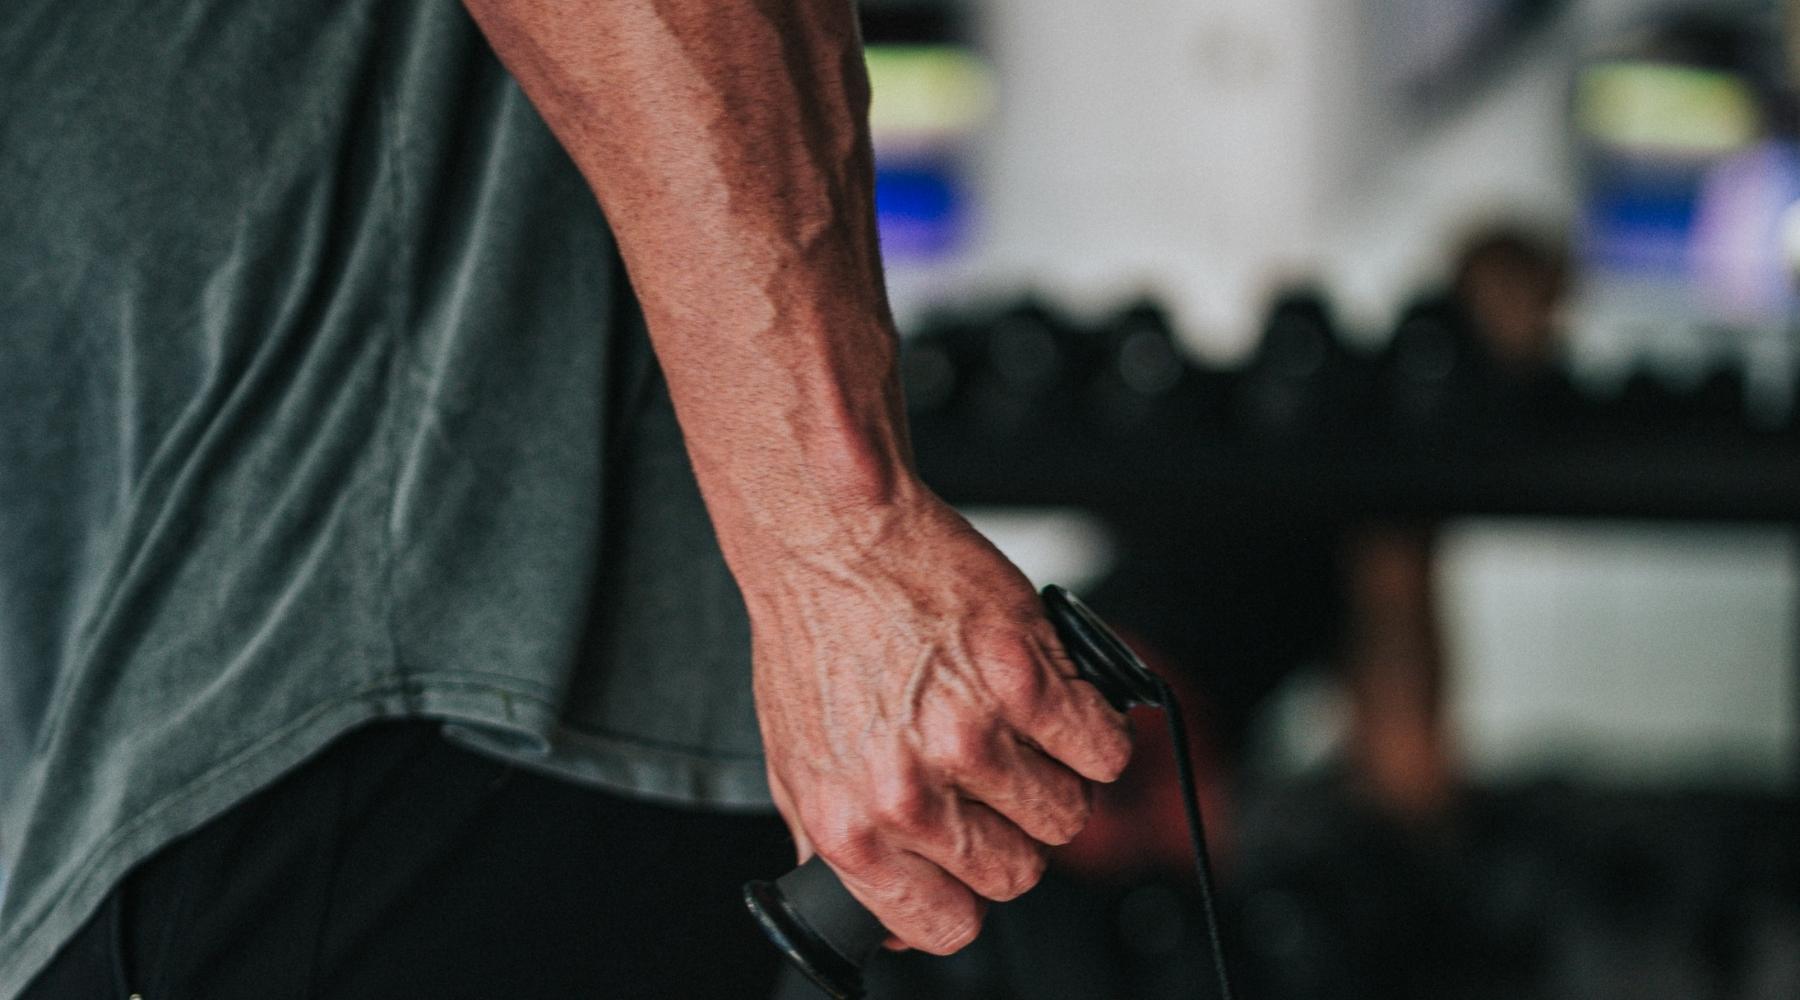 Appareil de Musculation Hand Grip Poignet Main Avant-Bras Exercice  Rééducation